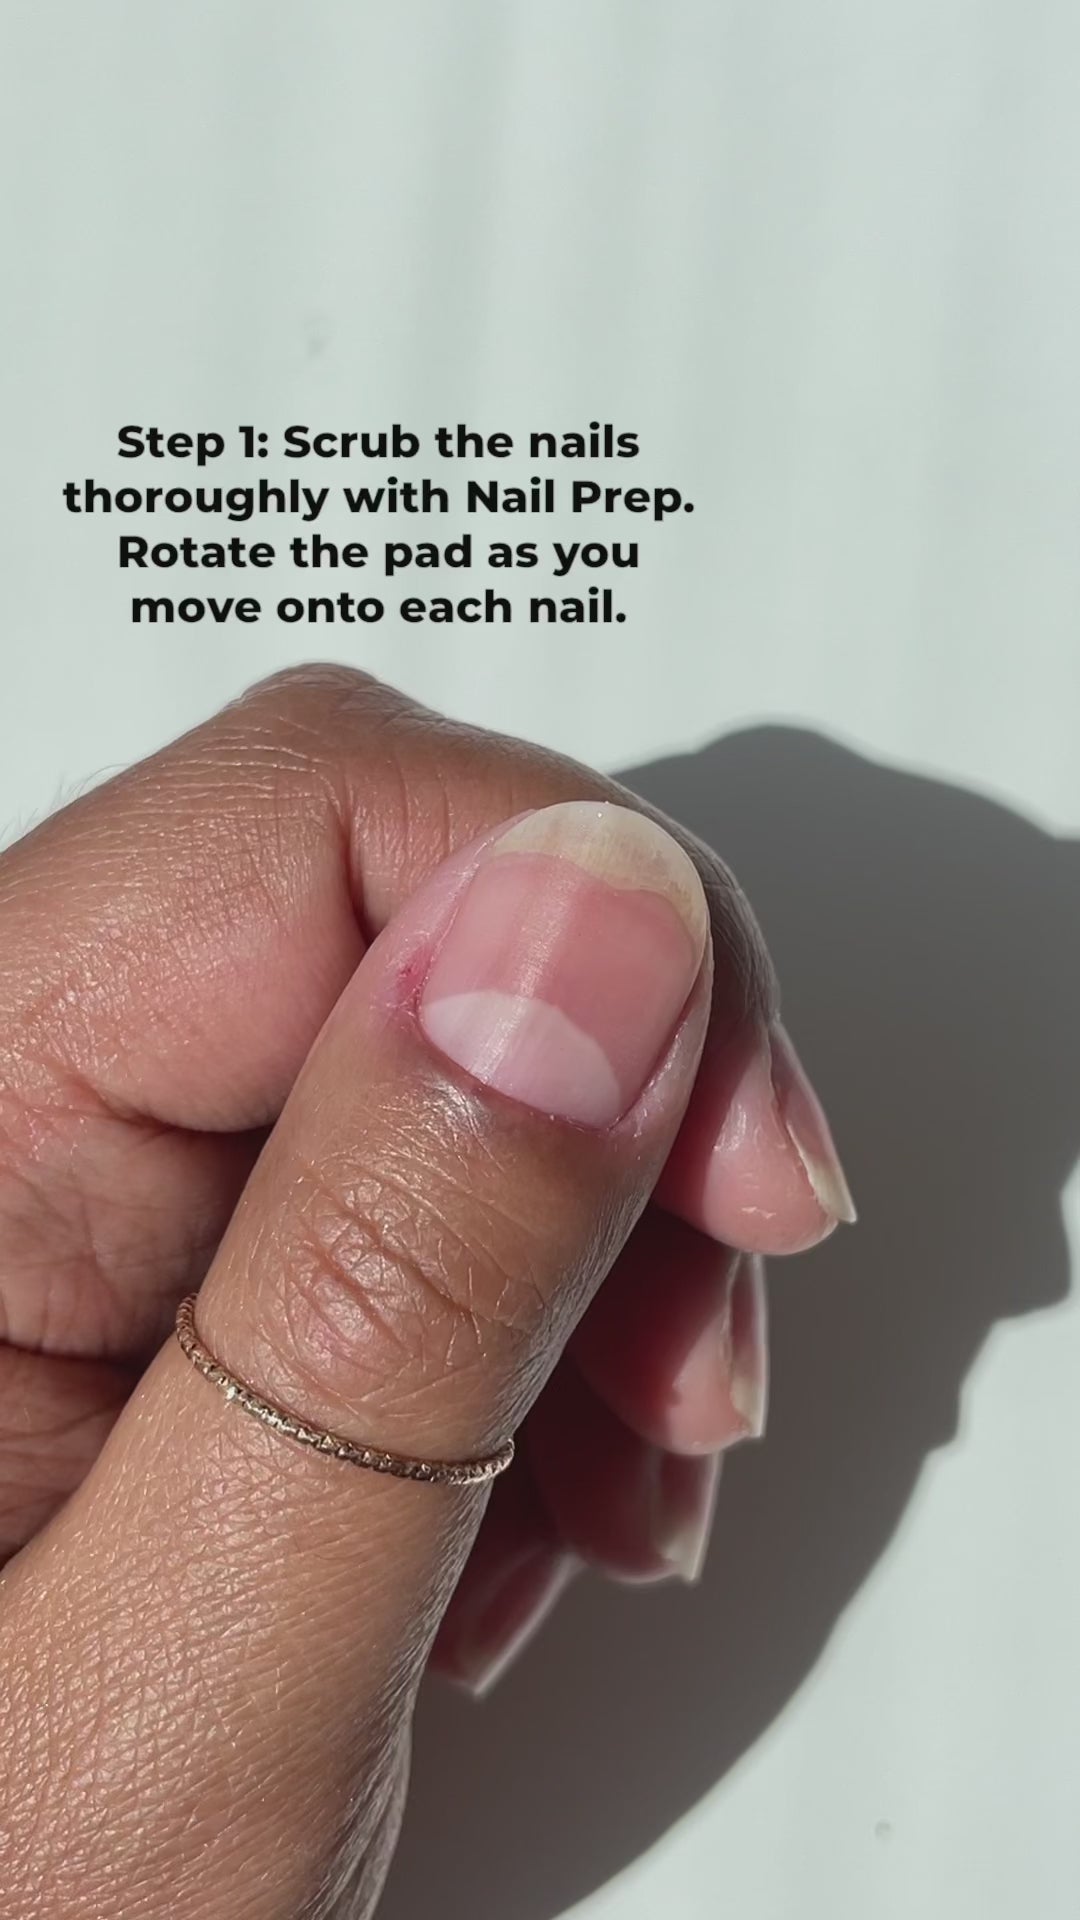 How to apply C.E.O. Mini - Dazzle Dry nail lacquer